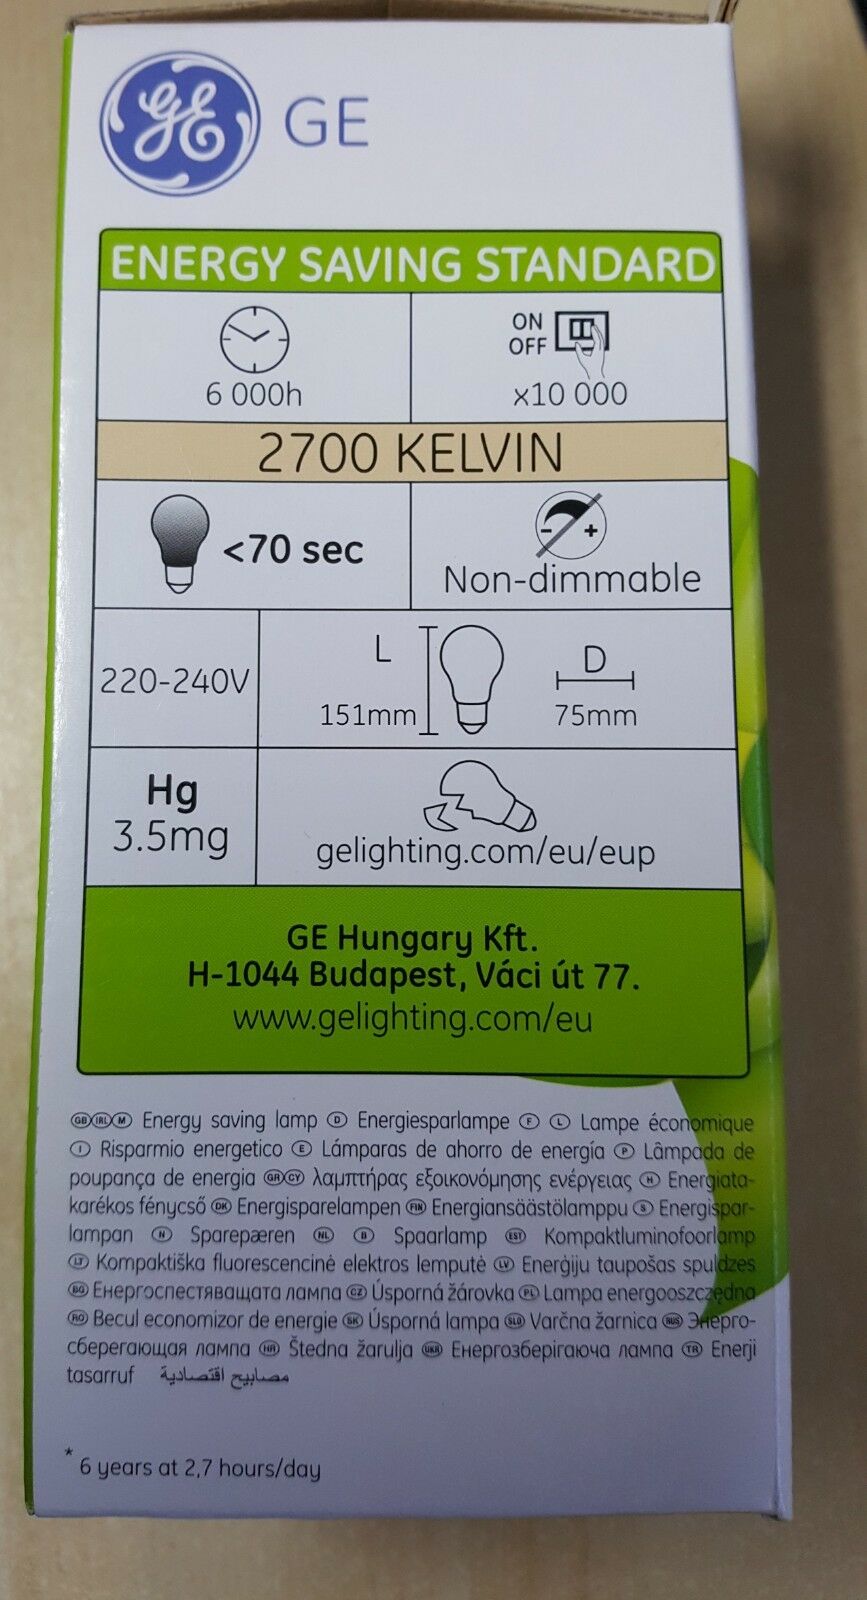 GE Energy Saving Bulbs BC (B22) or ES / E27 20W = 86W = 1160 Lumens - Beachcomber Lighting